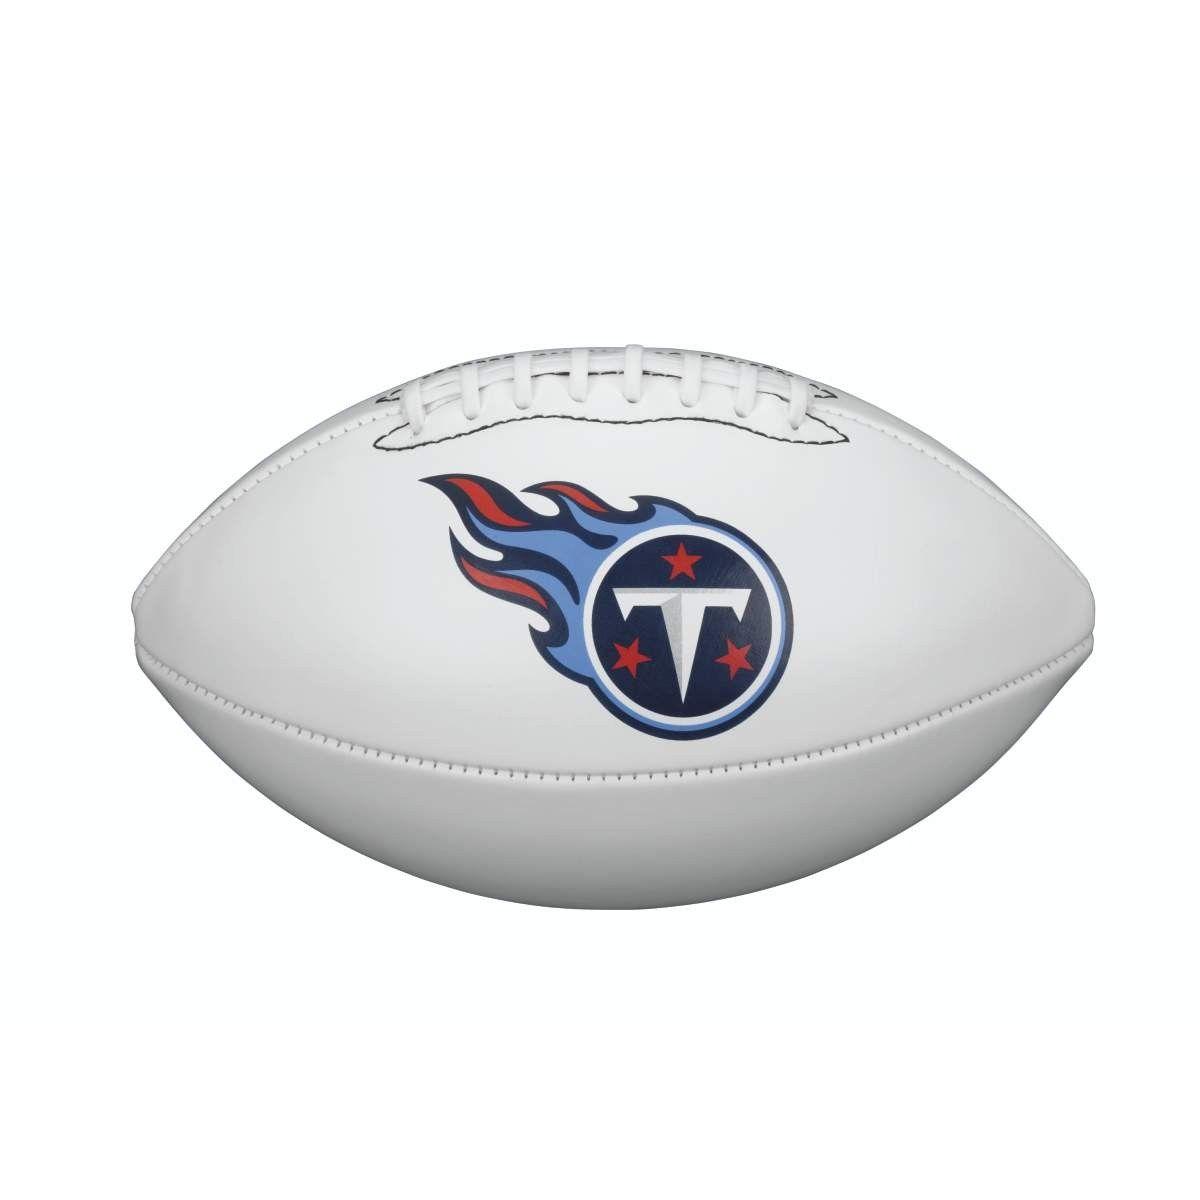 Titans Football Logo - NFL TEAM LOGO AUTOGRAPH FOOTBALL, TENNESSEE TITANS